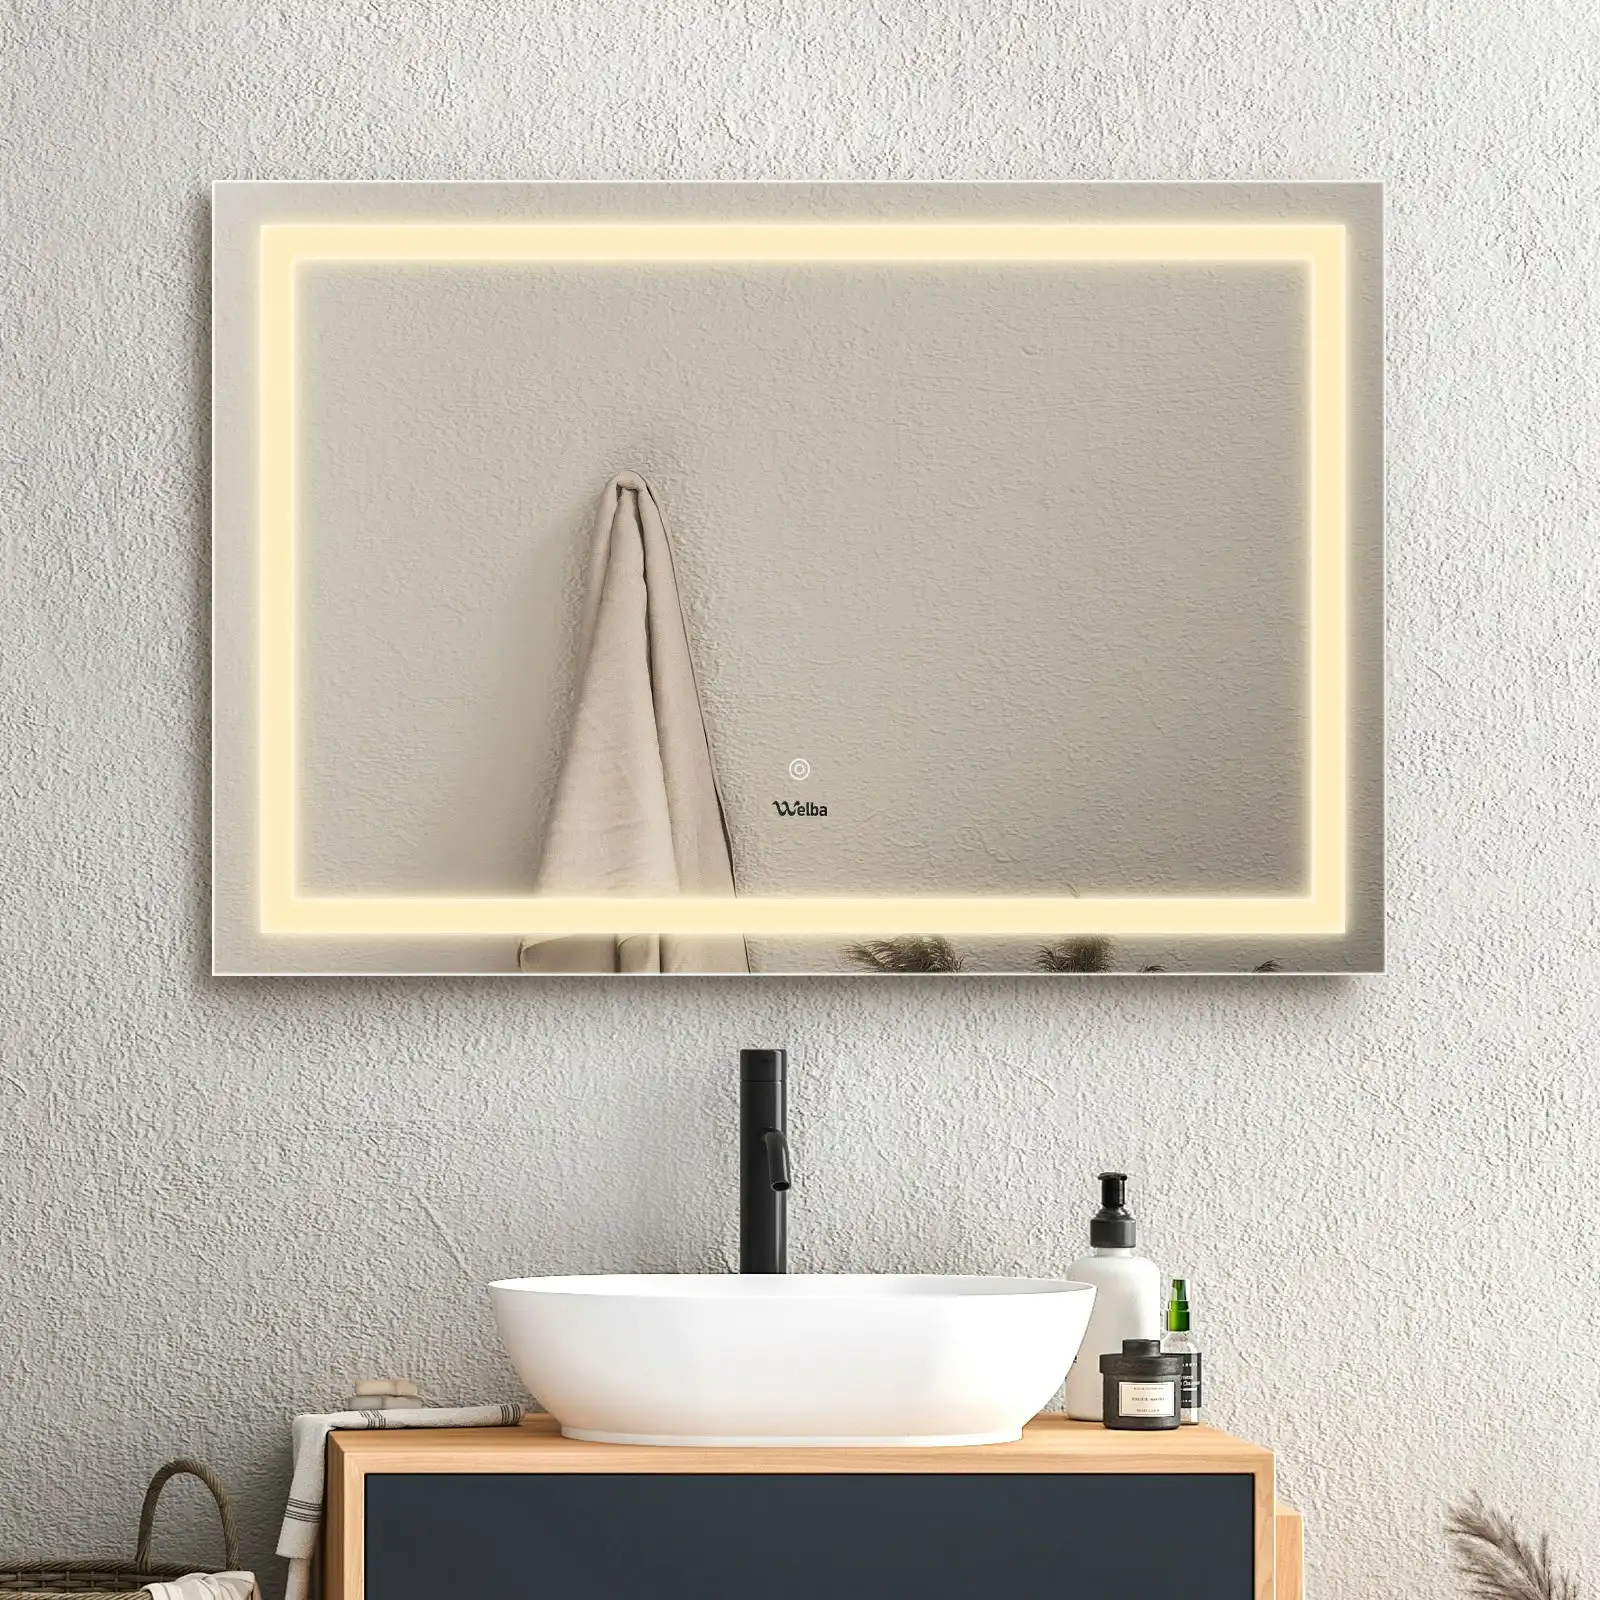 Welba LED Rectangle Bathroom Mirror Smart Anti-fog Makeup Wall Mirrors 100x70cm